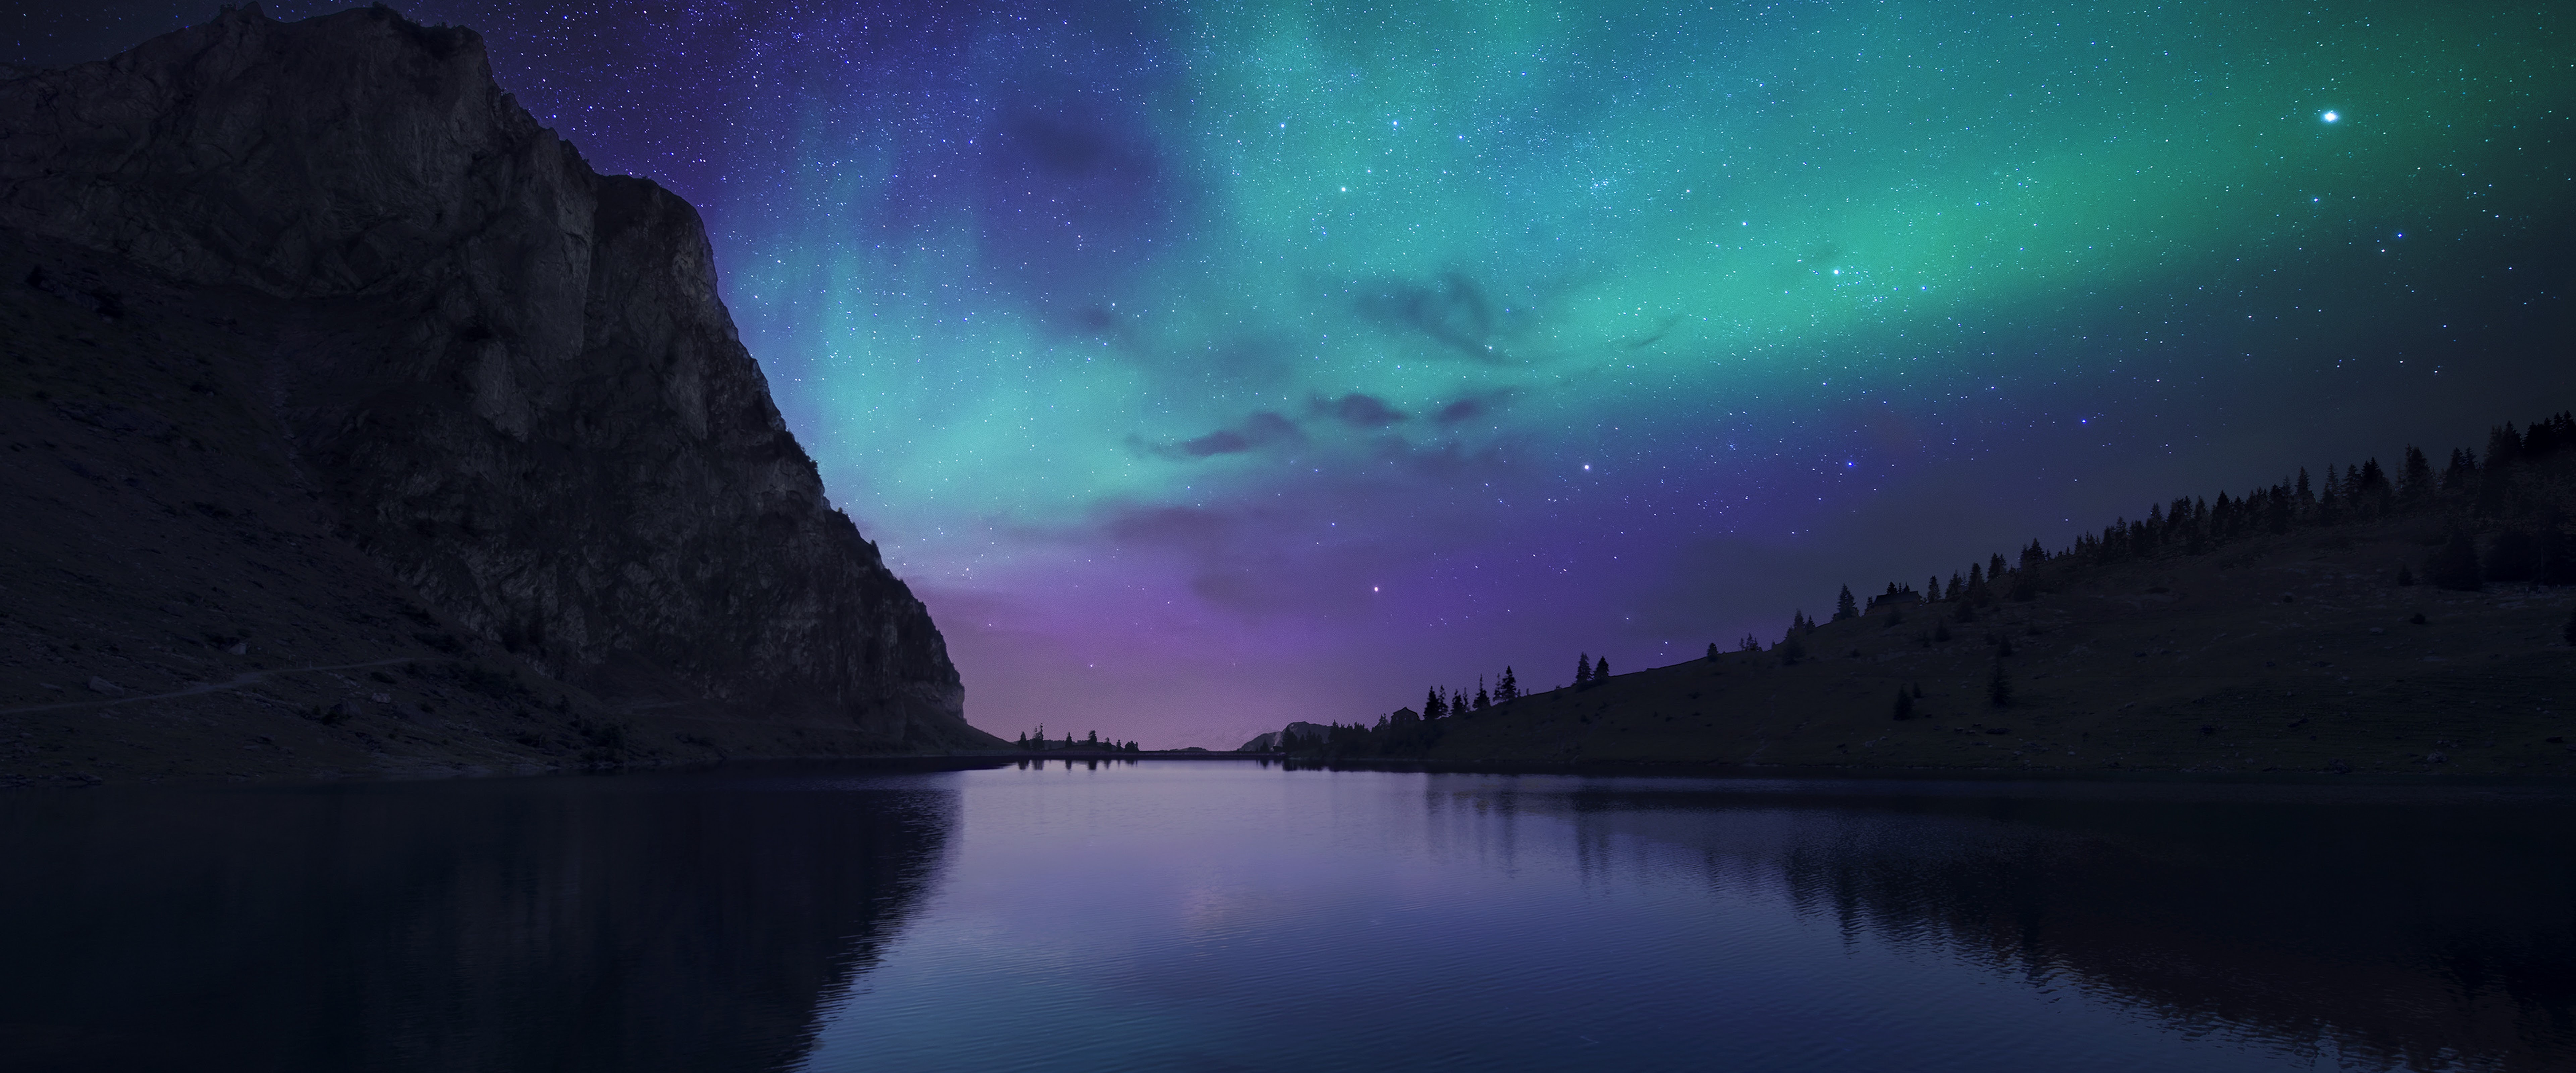 Aurora Borealis Night Sky Stars Lake Nature Scenery 4k Wallpaper